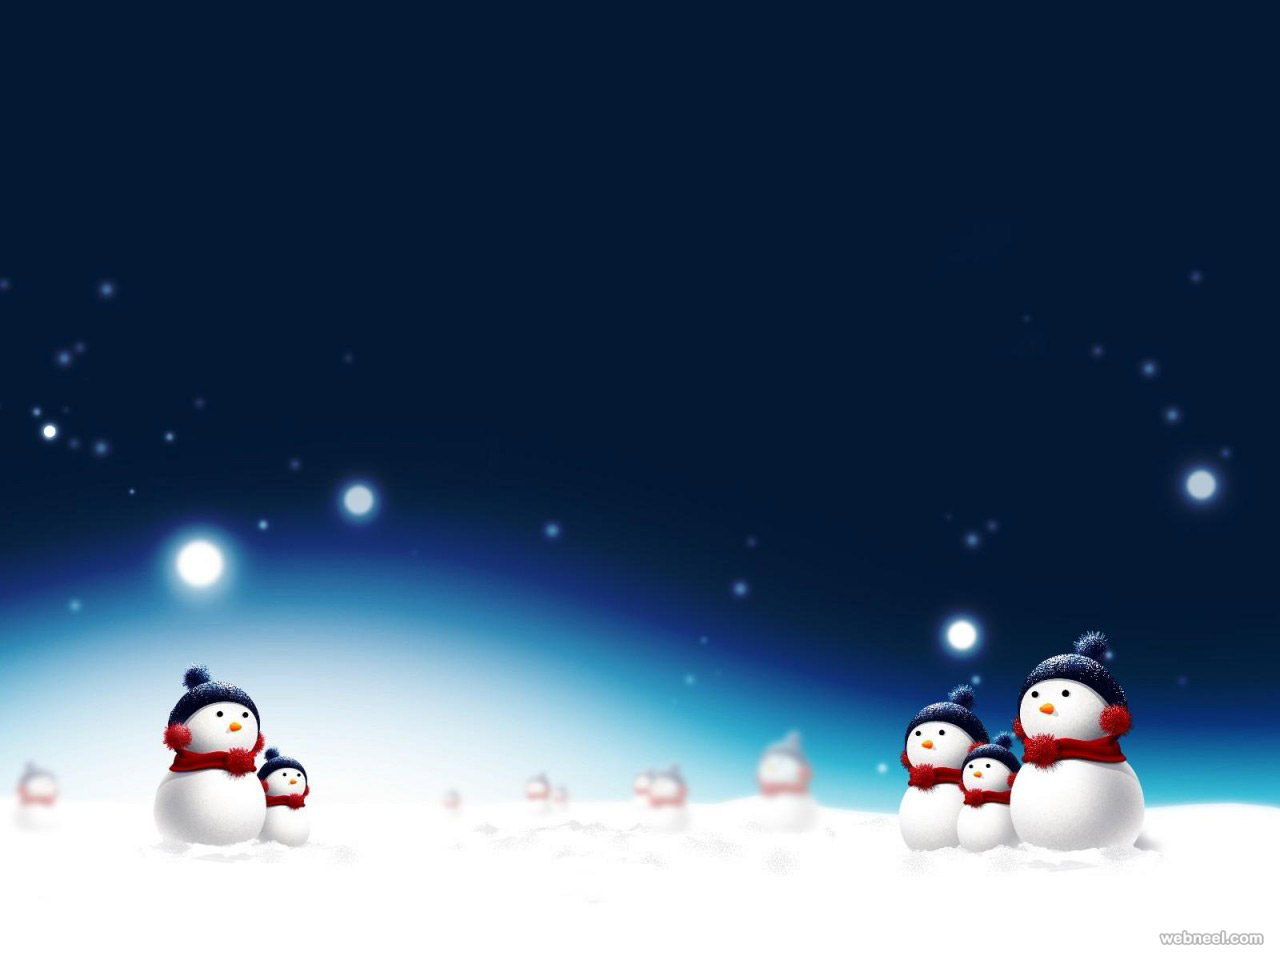 Artistic Snowman 4k Ultra HD Wallpaper